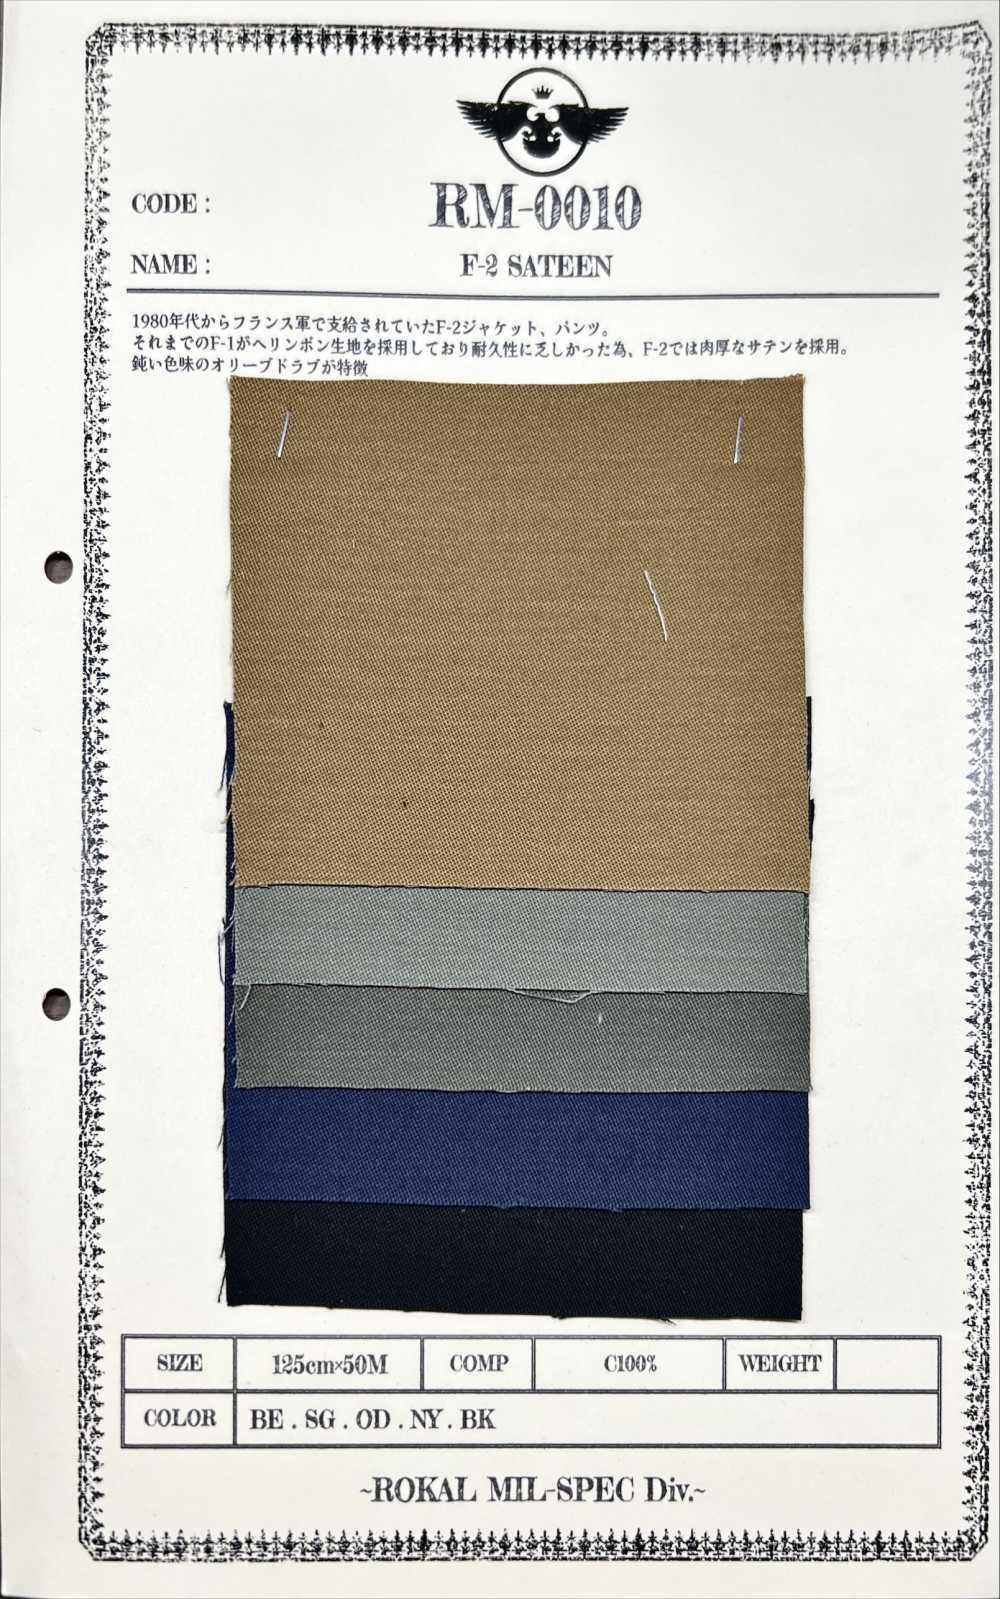 RM-0010 F2 SATIN[Textile / Fabric] Local